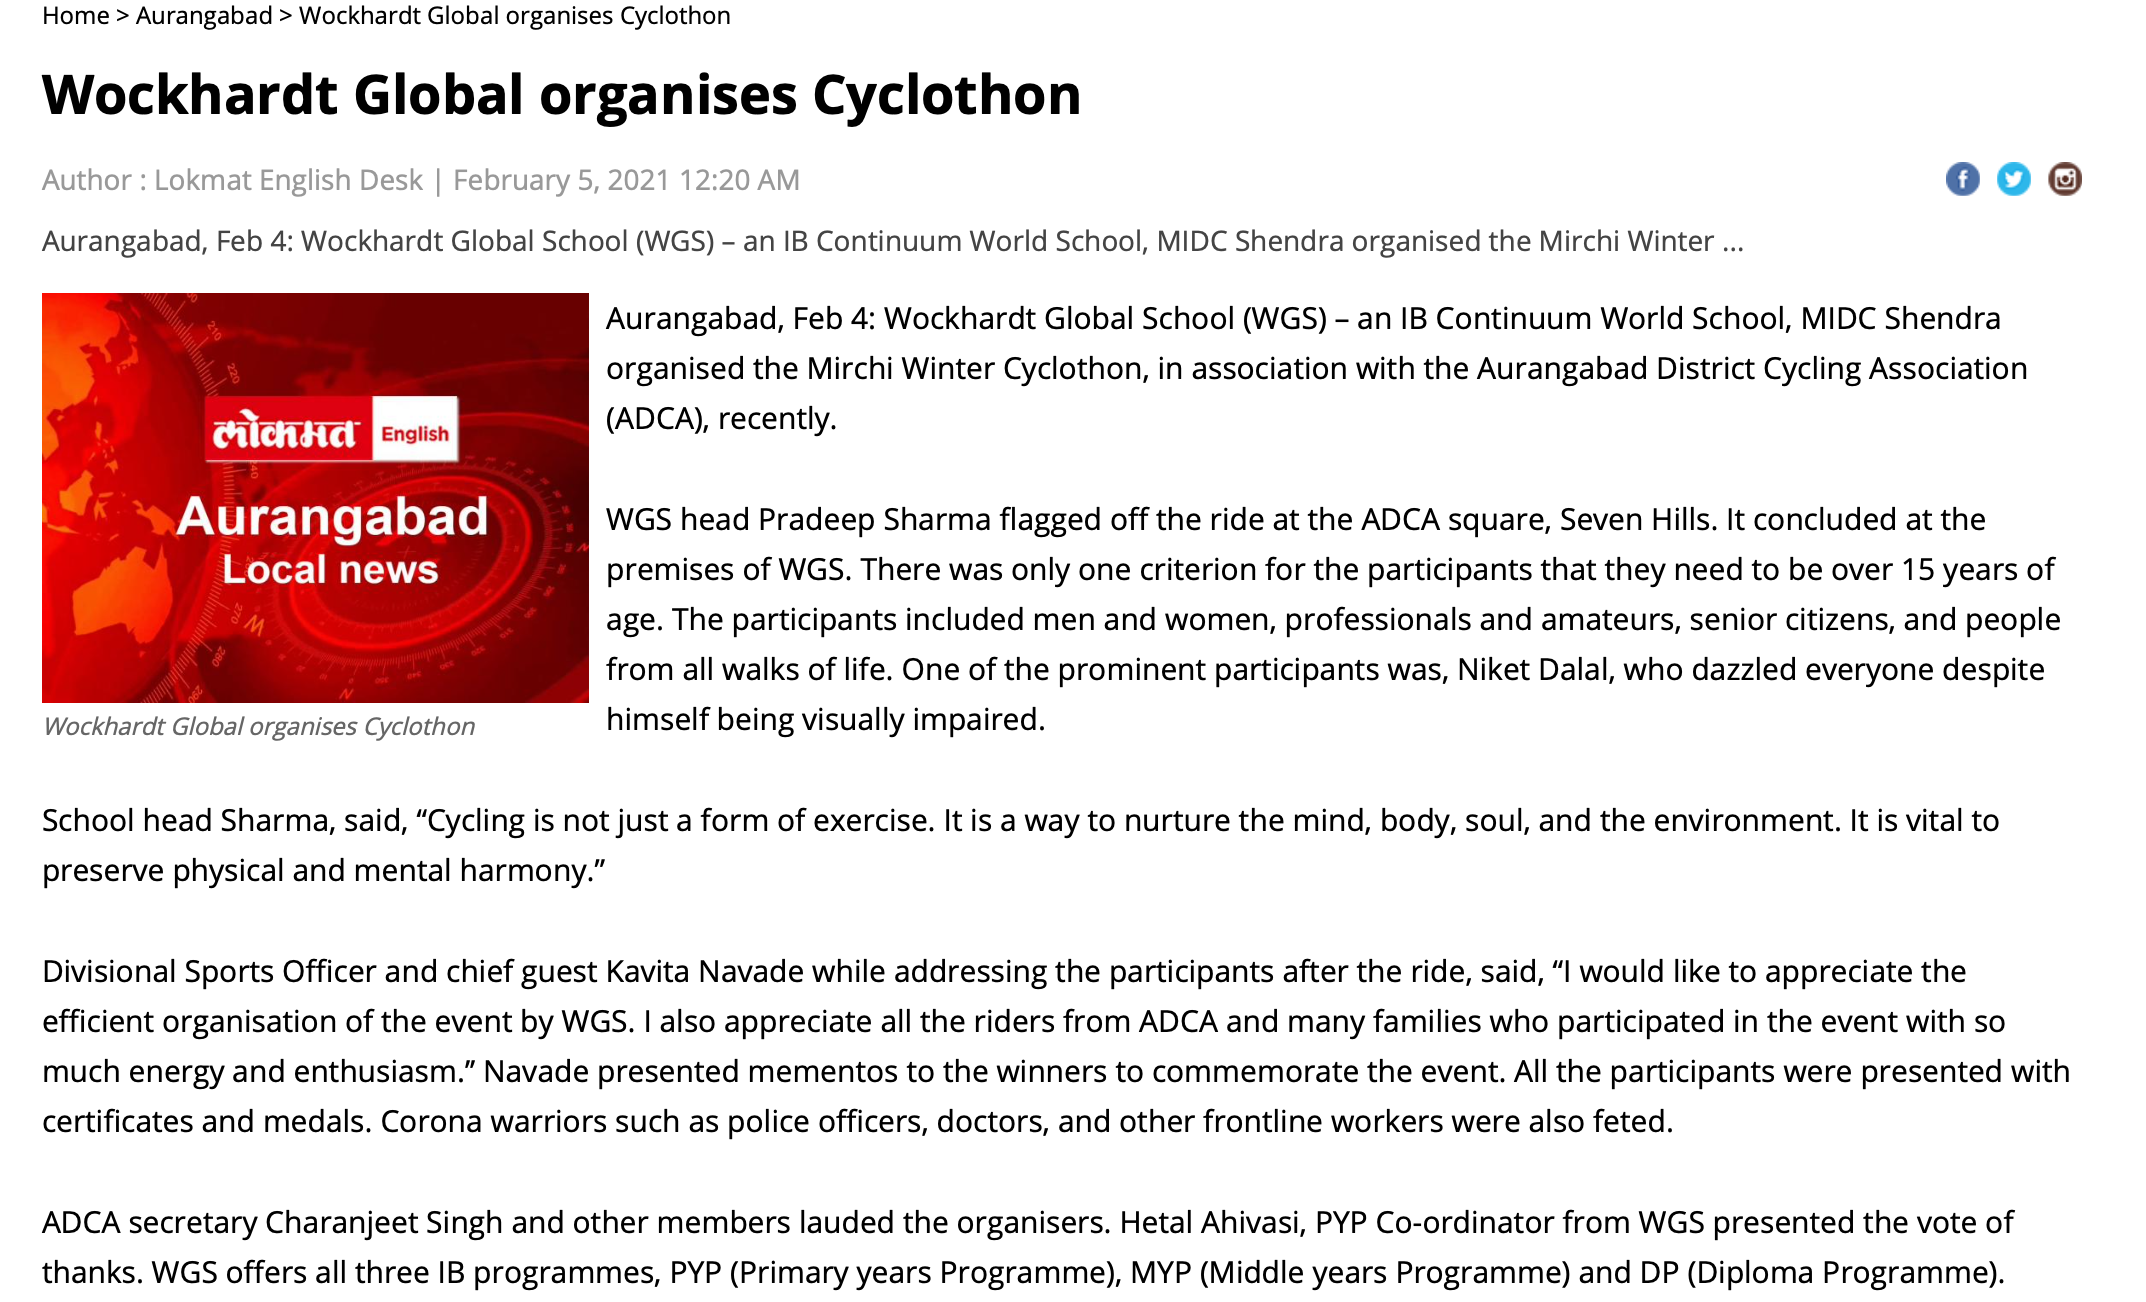 https://english.lokmat.com/aurangabad/wockhardt-global-organises-cyclothon/